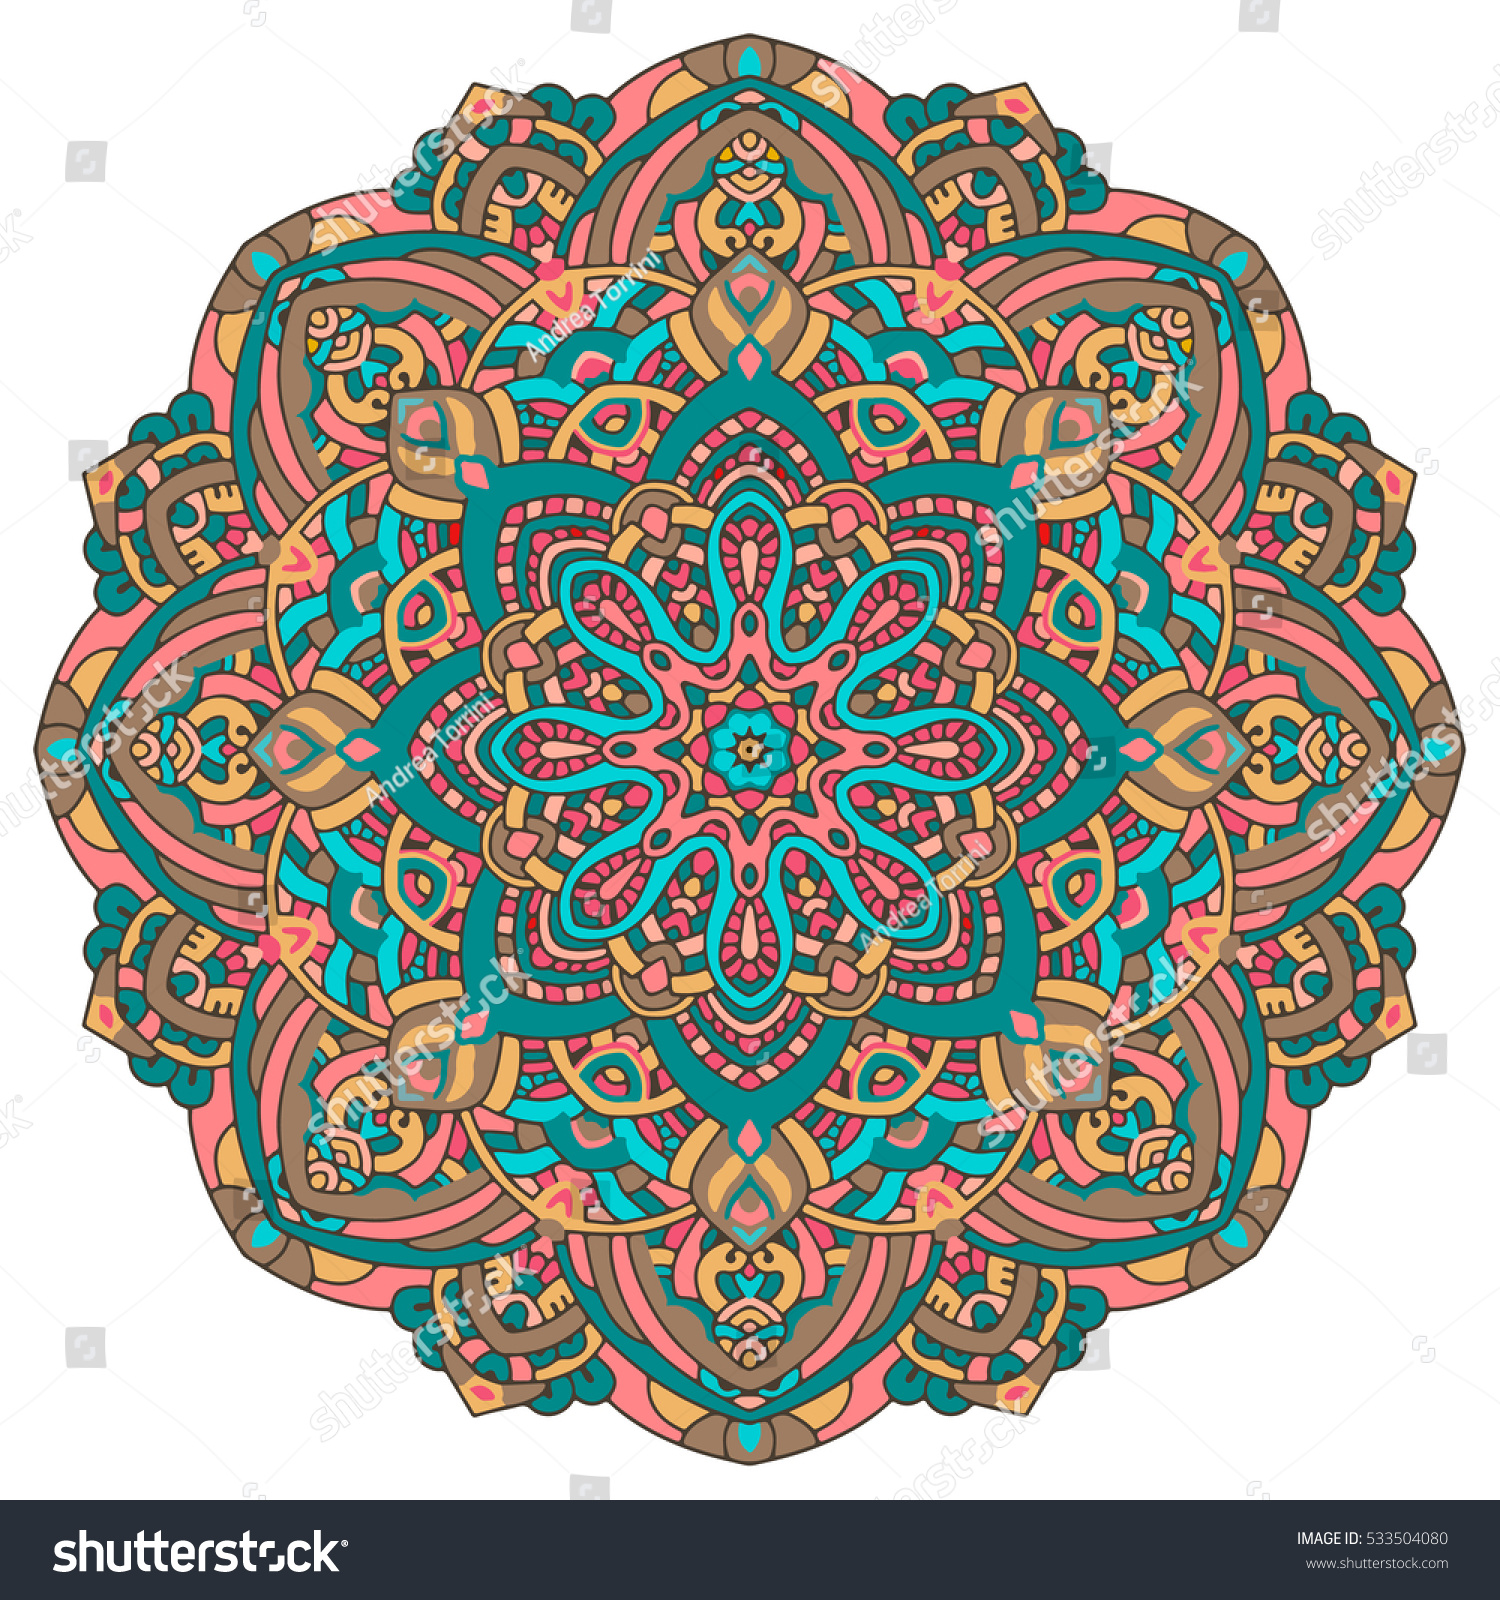 Download Vector Round Abstract Circle. Mandala Style. - 533504080 ...